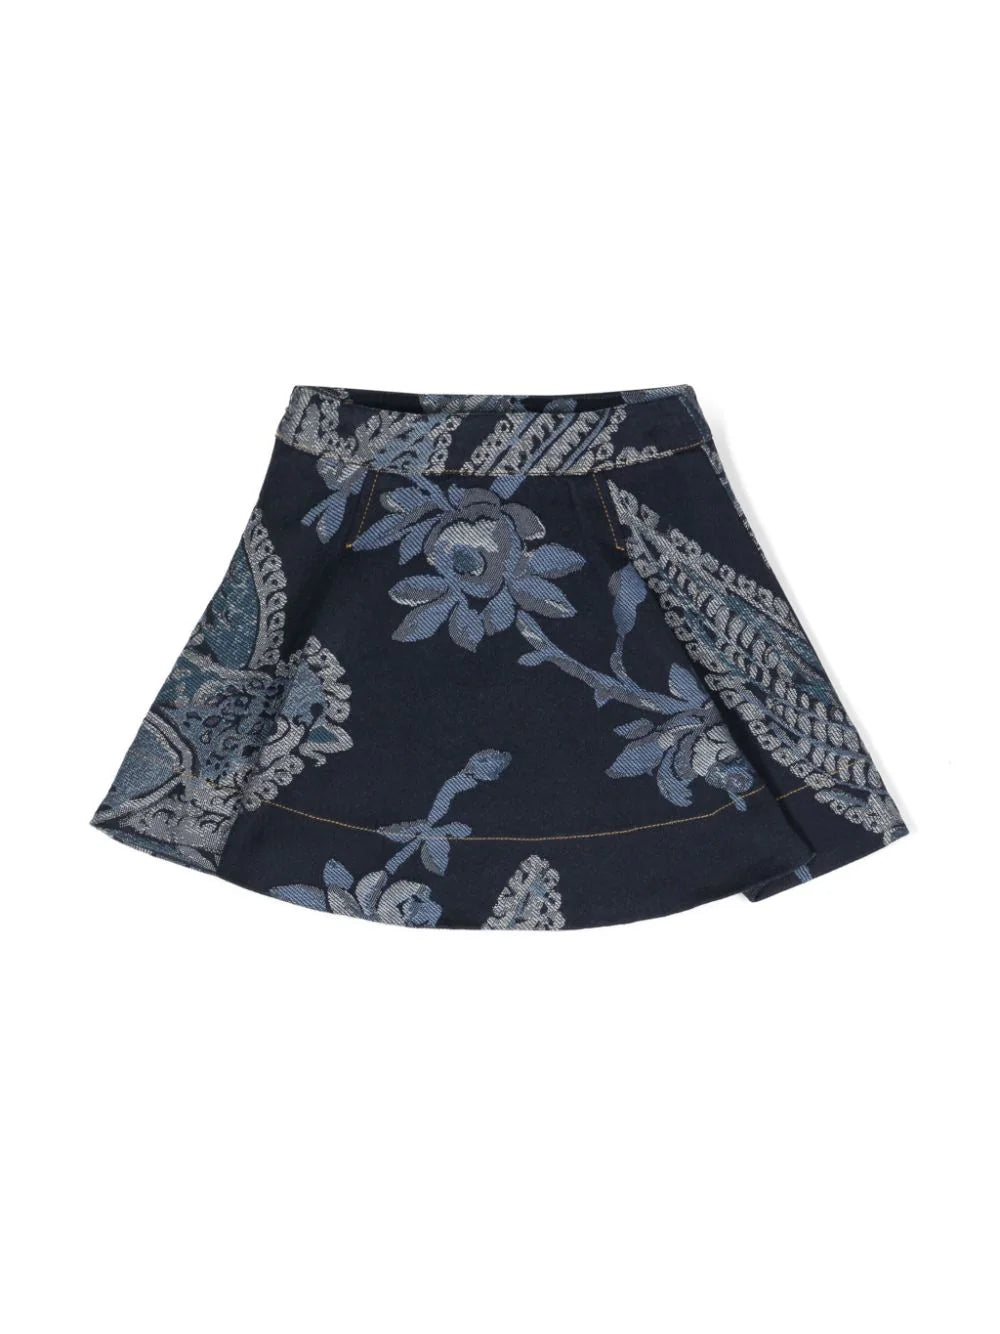 ETRO KIDS floral-jacquard flared denim skirt